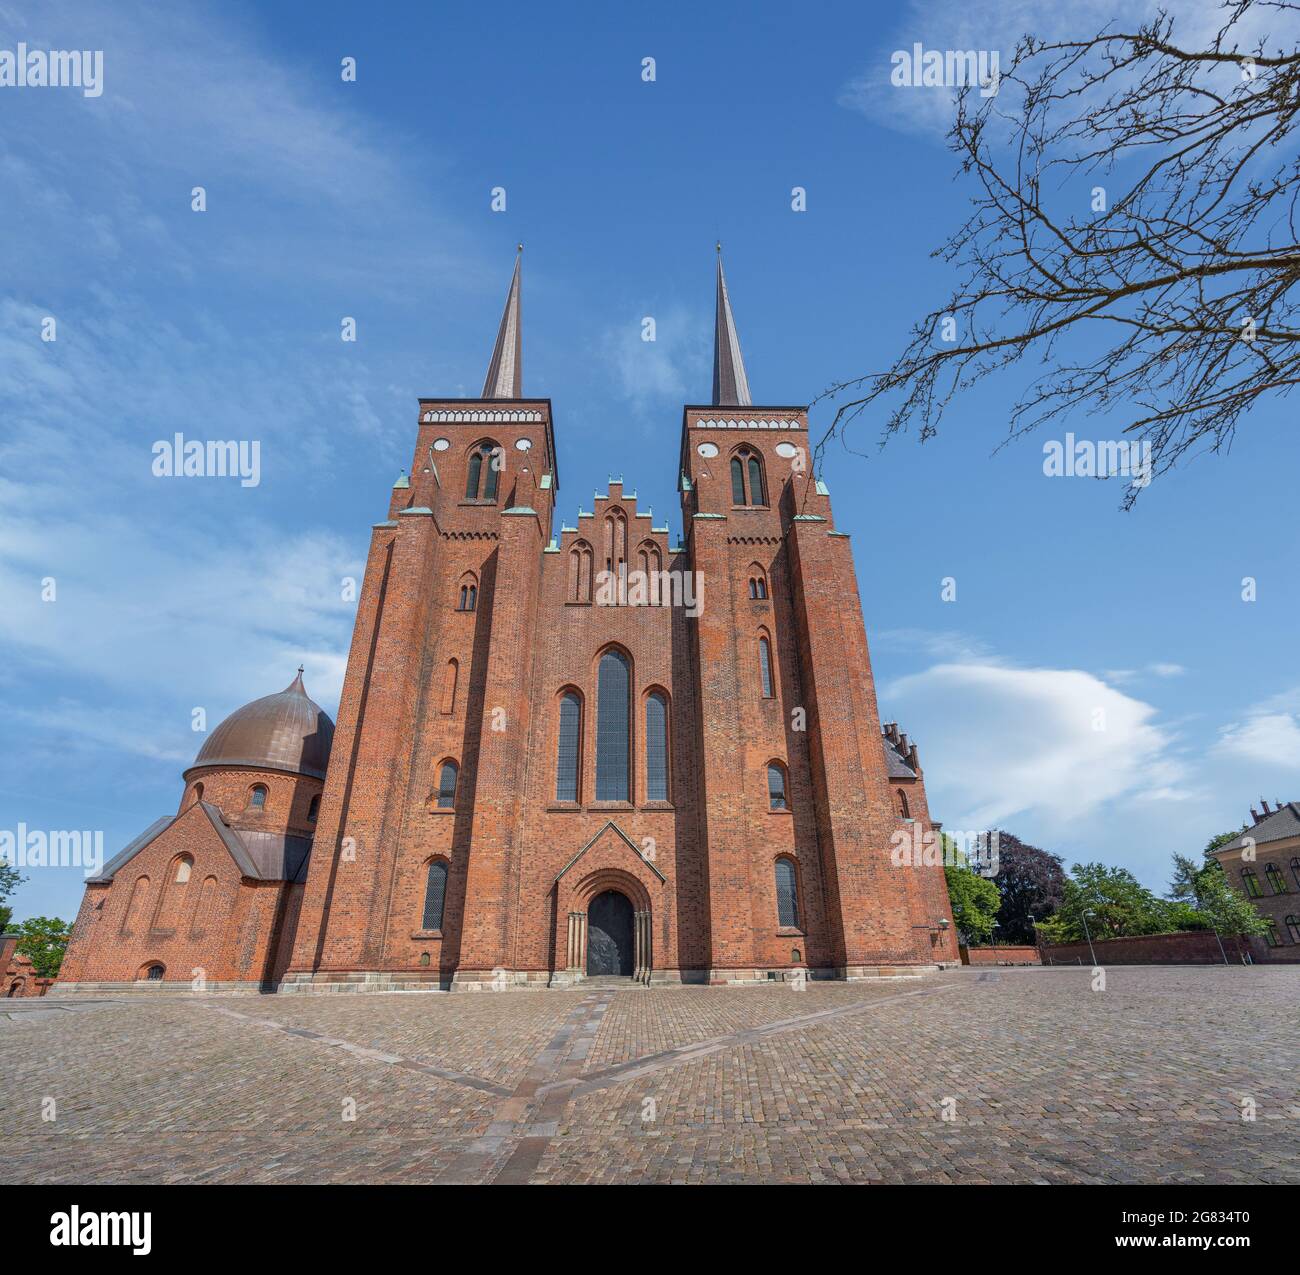 Catedral de Roskilde - Roskilde, Dinamarca Foto de stock